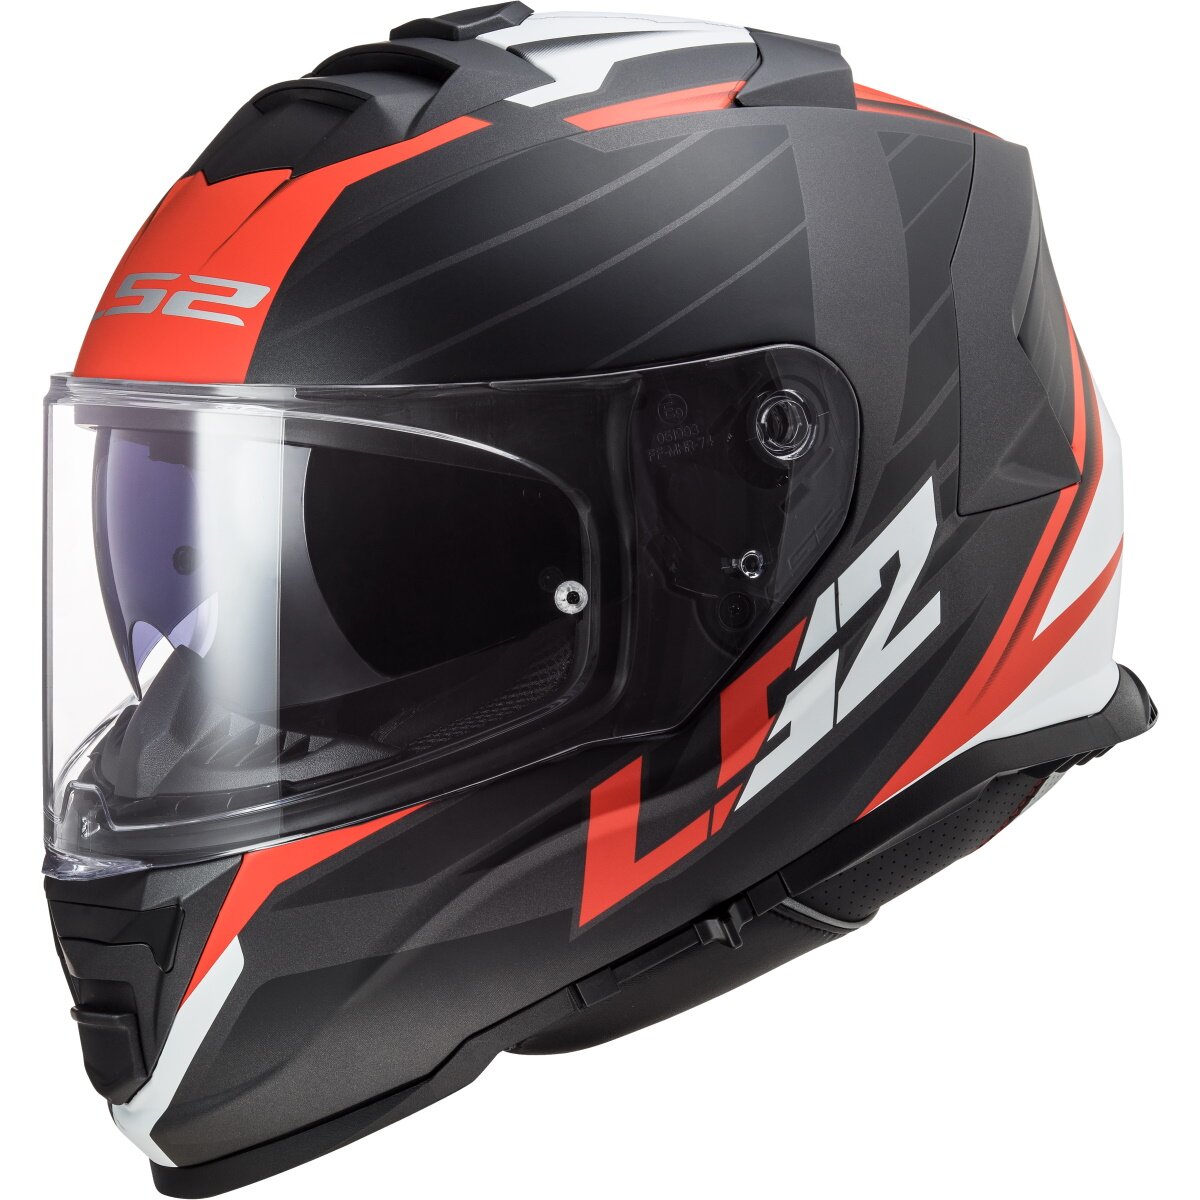 LS2 FF800 / helmet Nerve Storm mo, 151,20 matt-black red | full-face €